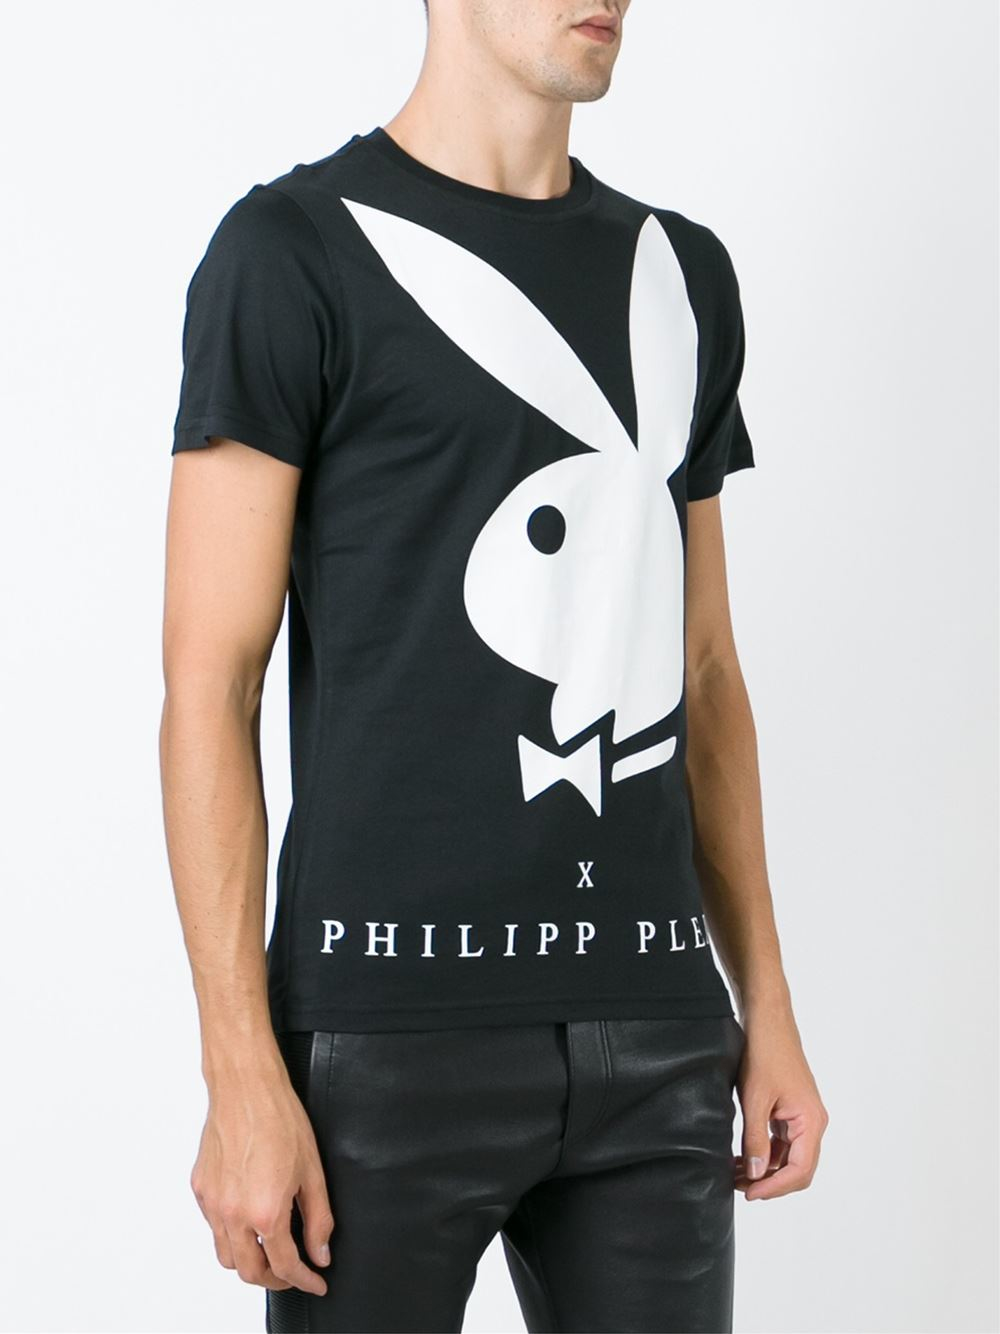 Philipp Plein Playboy Bunny T-shirt in Black for Men - Lyst